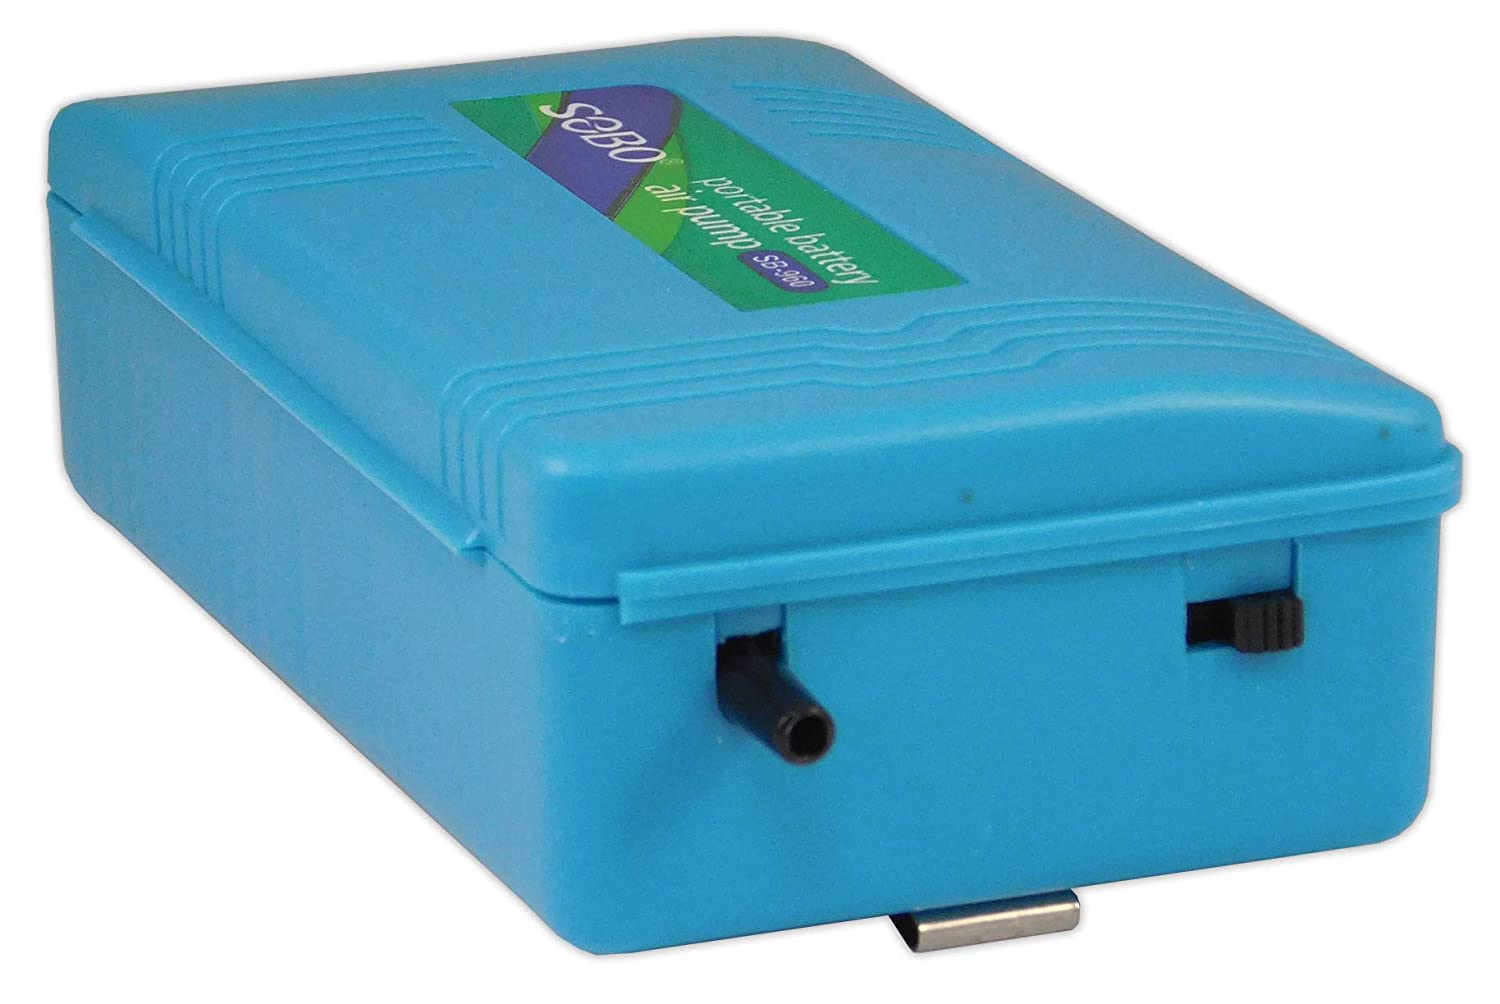 Buy Sobo SB960 Portable Battery Air Pump Online Get 21 Off